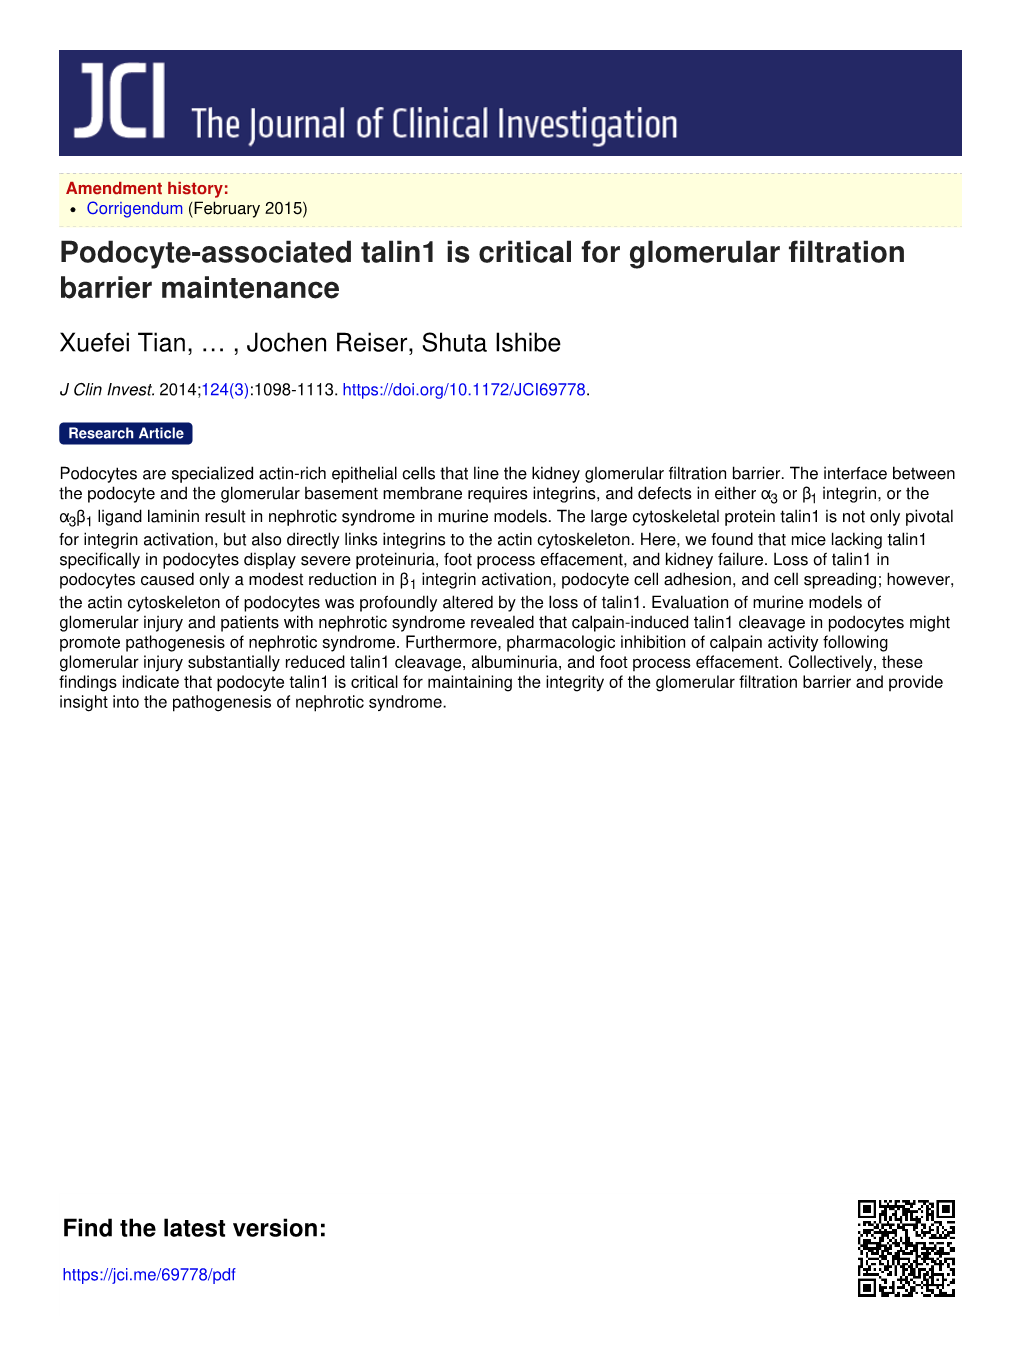 Podocyte-Associated Talin1 Is Critical for Glomerular Filtration Barrier Maintenance